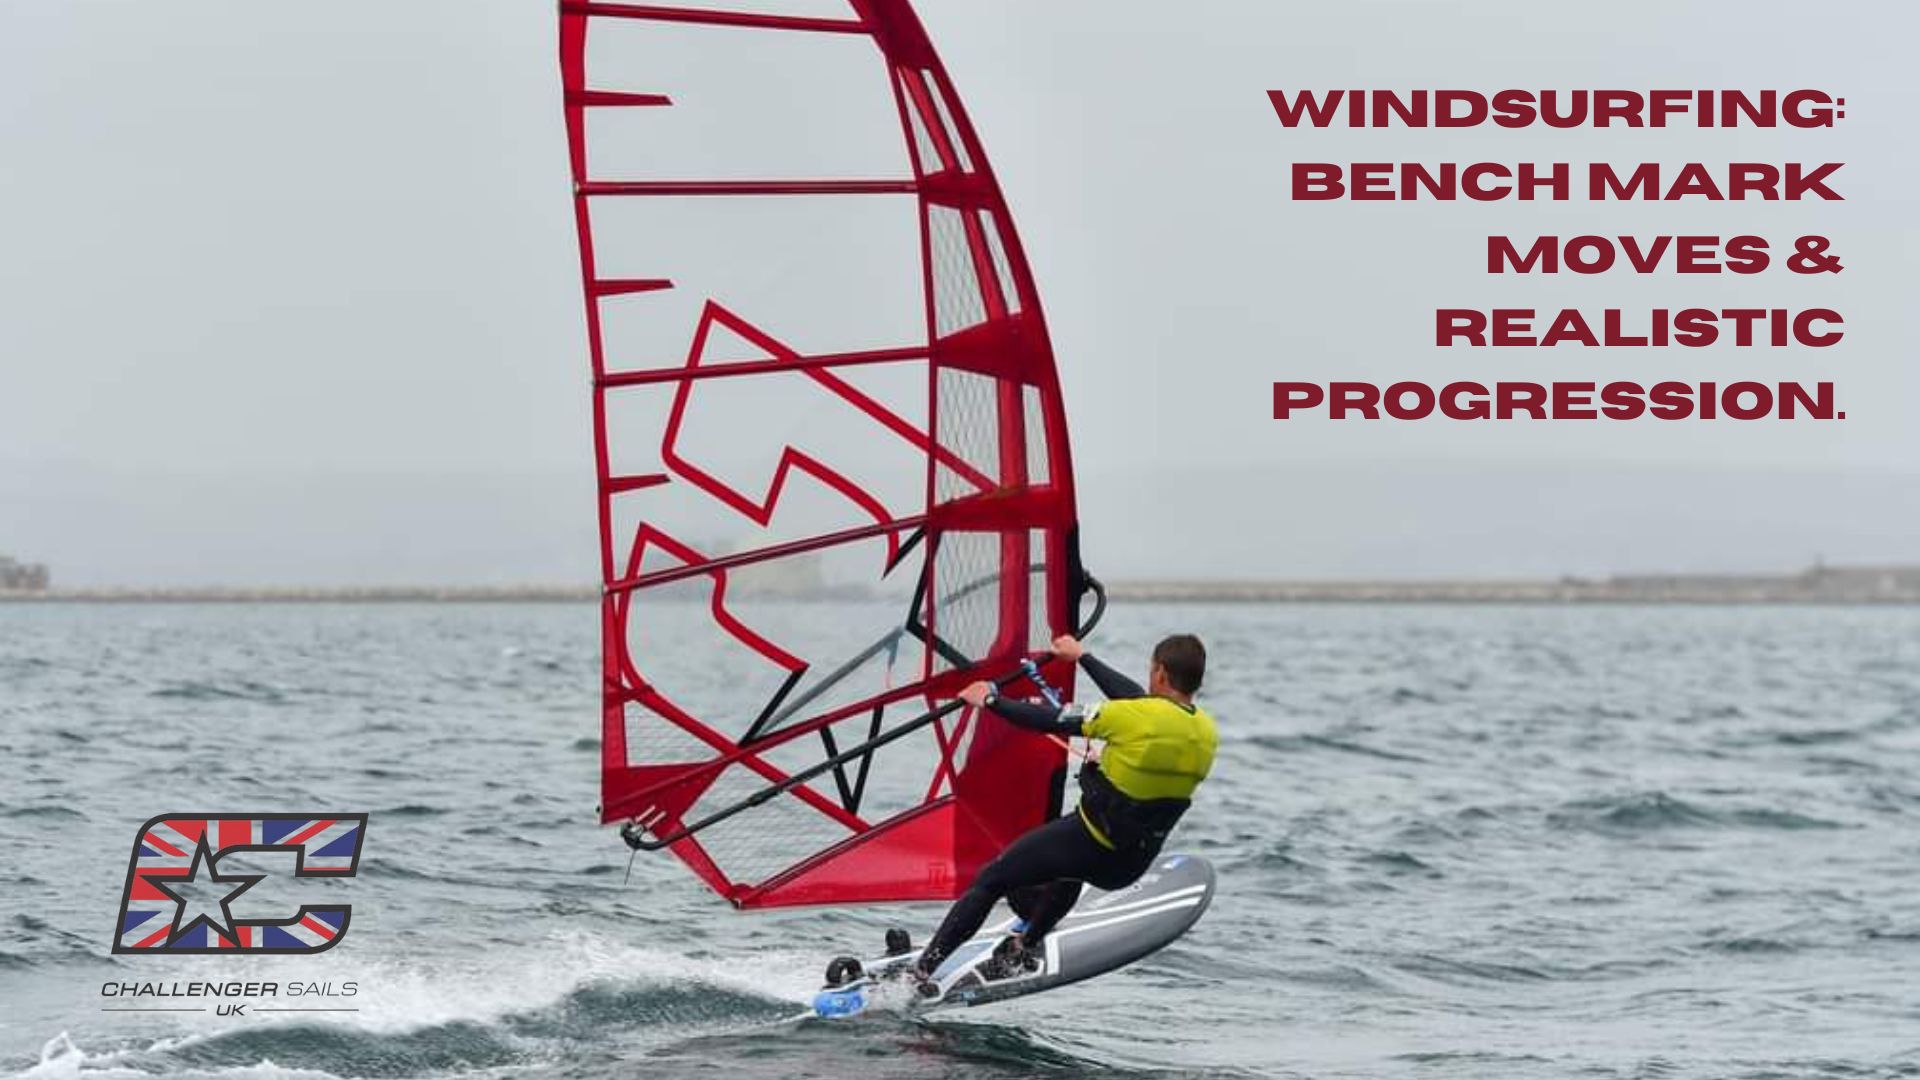 Windsurfing: bench mark moves & realistic progression.